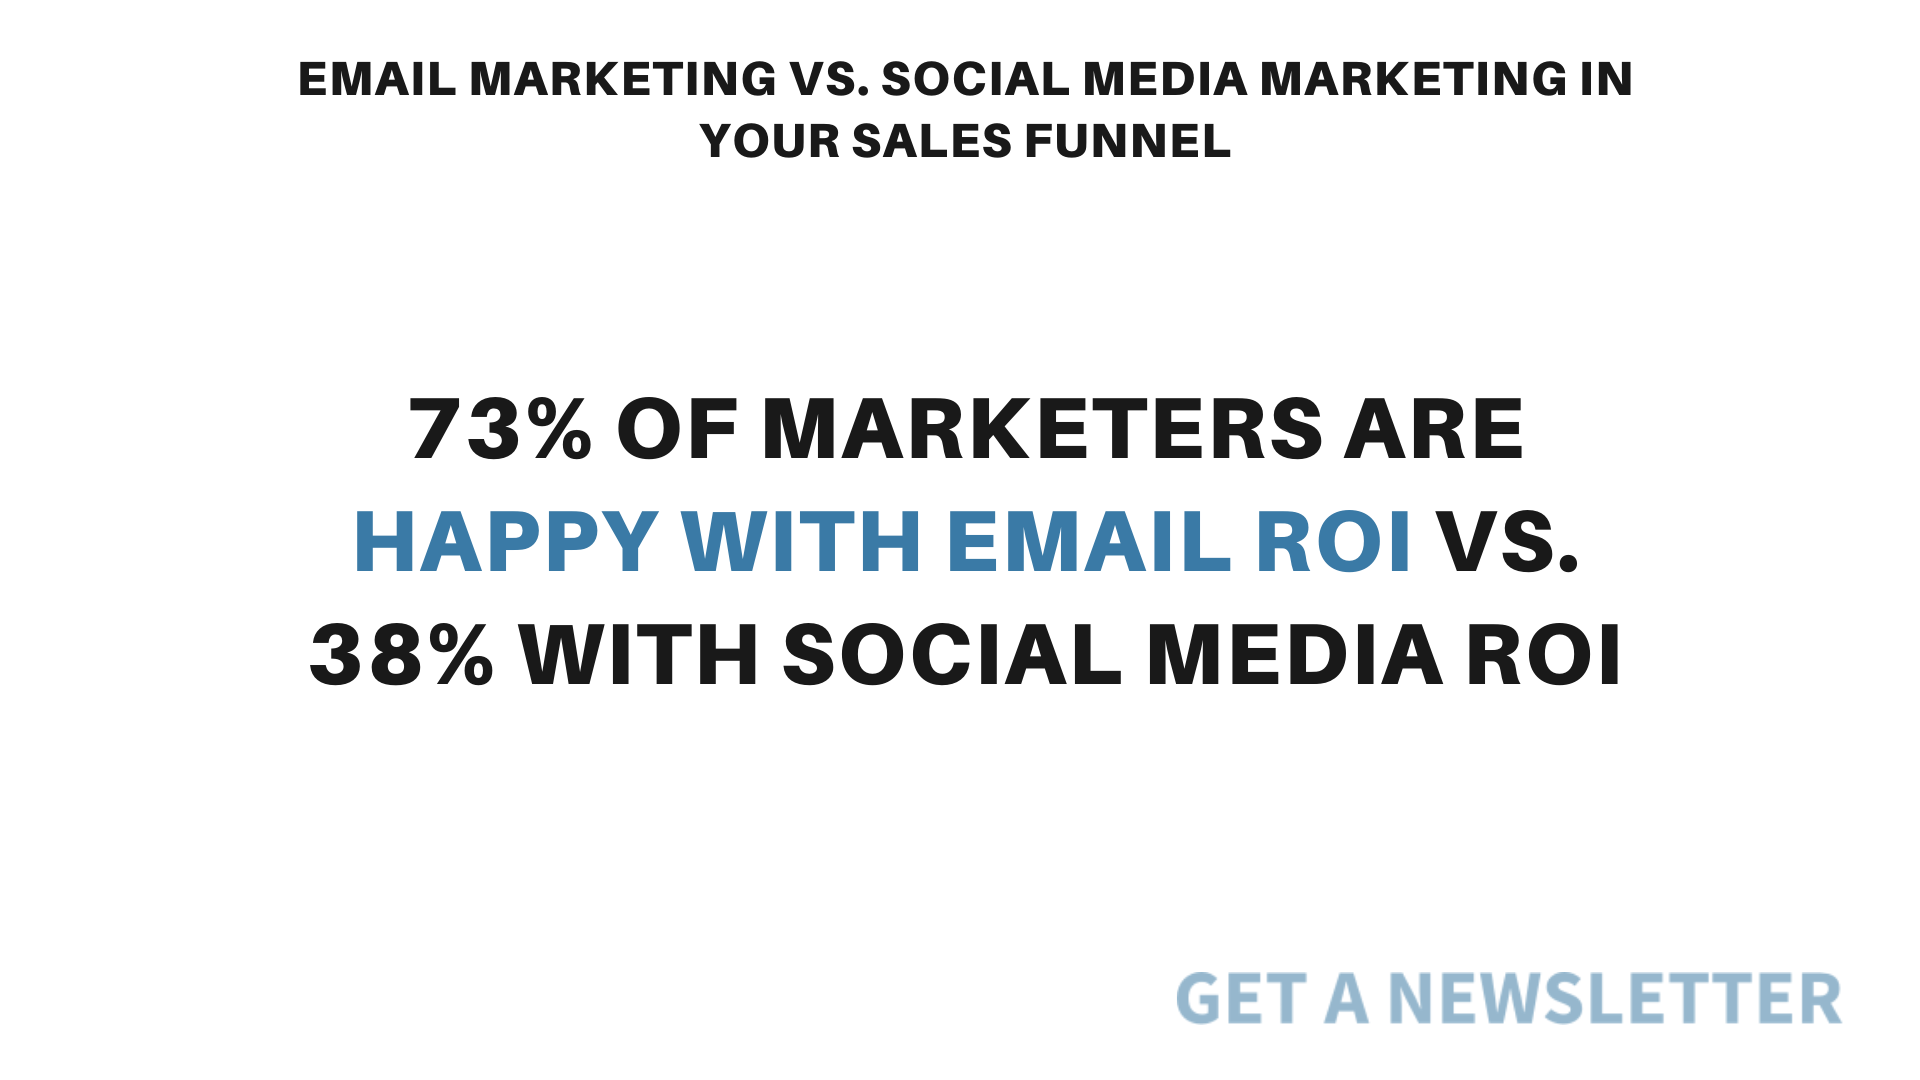 email marketing ROI vs social media ROI